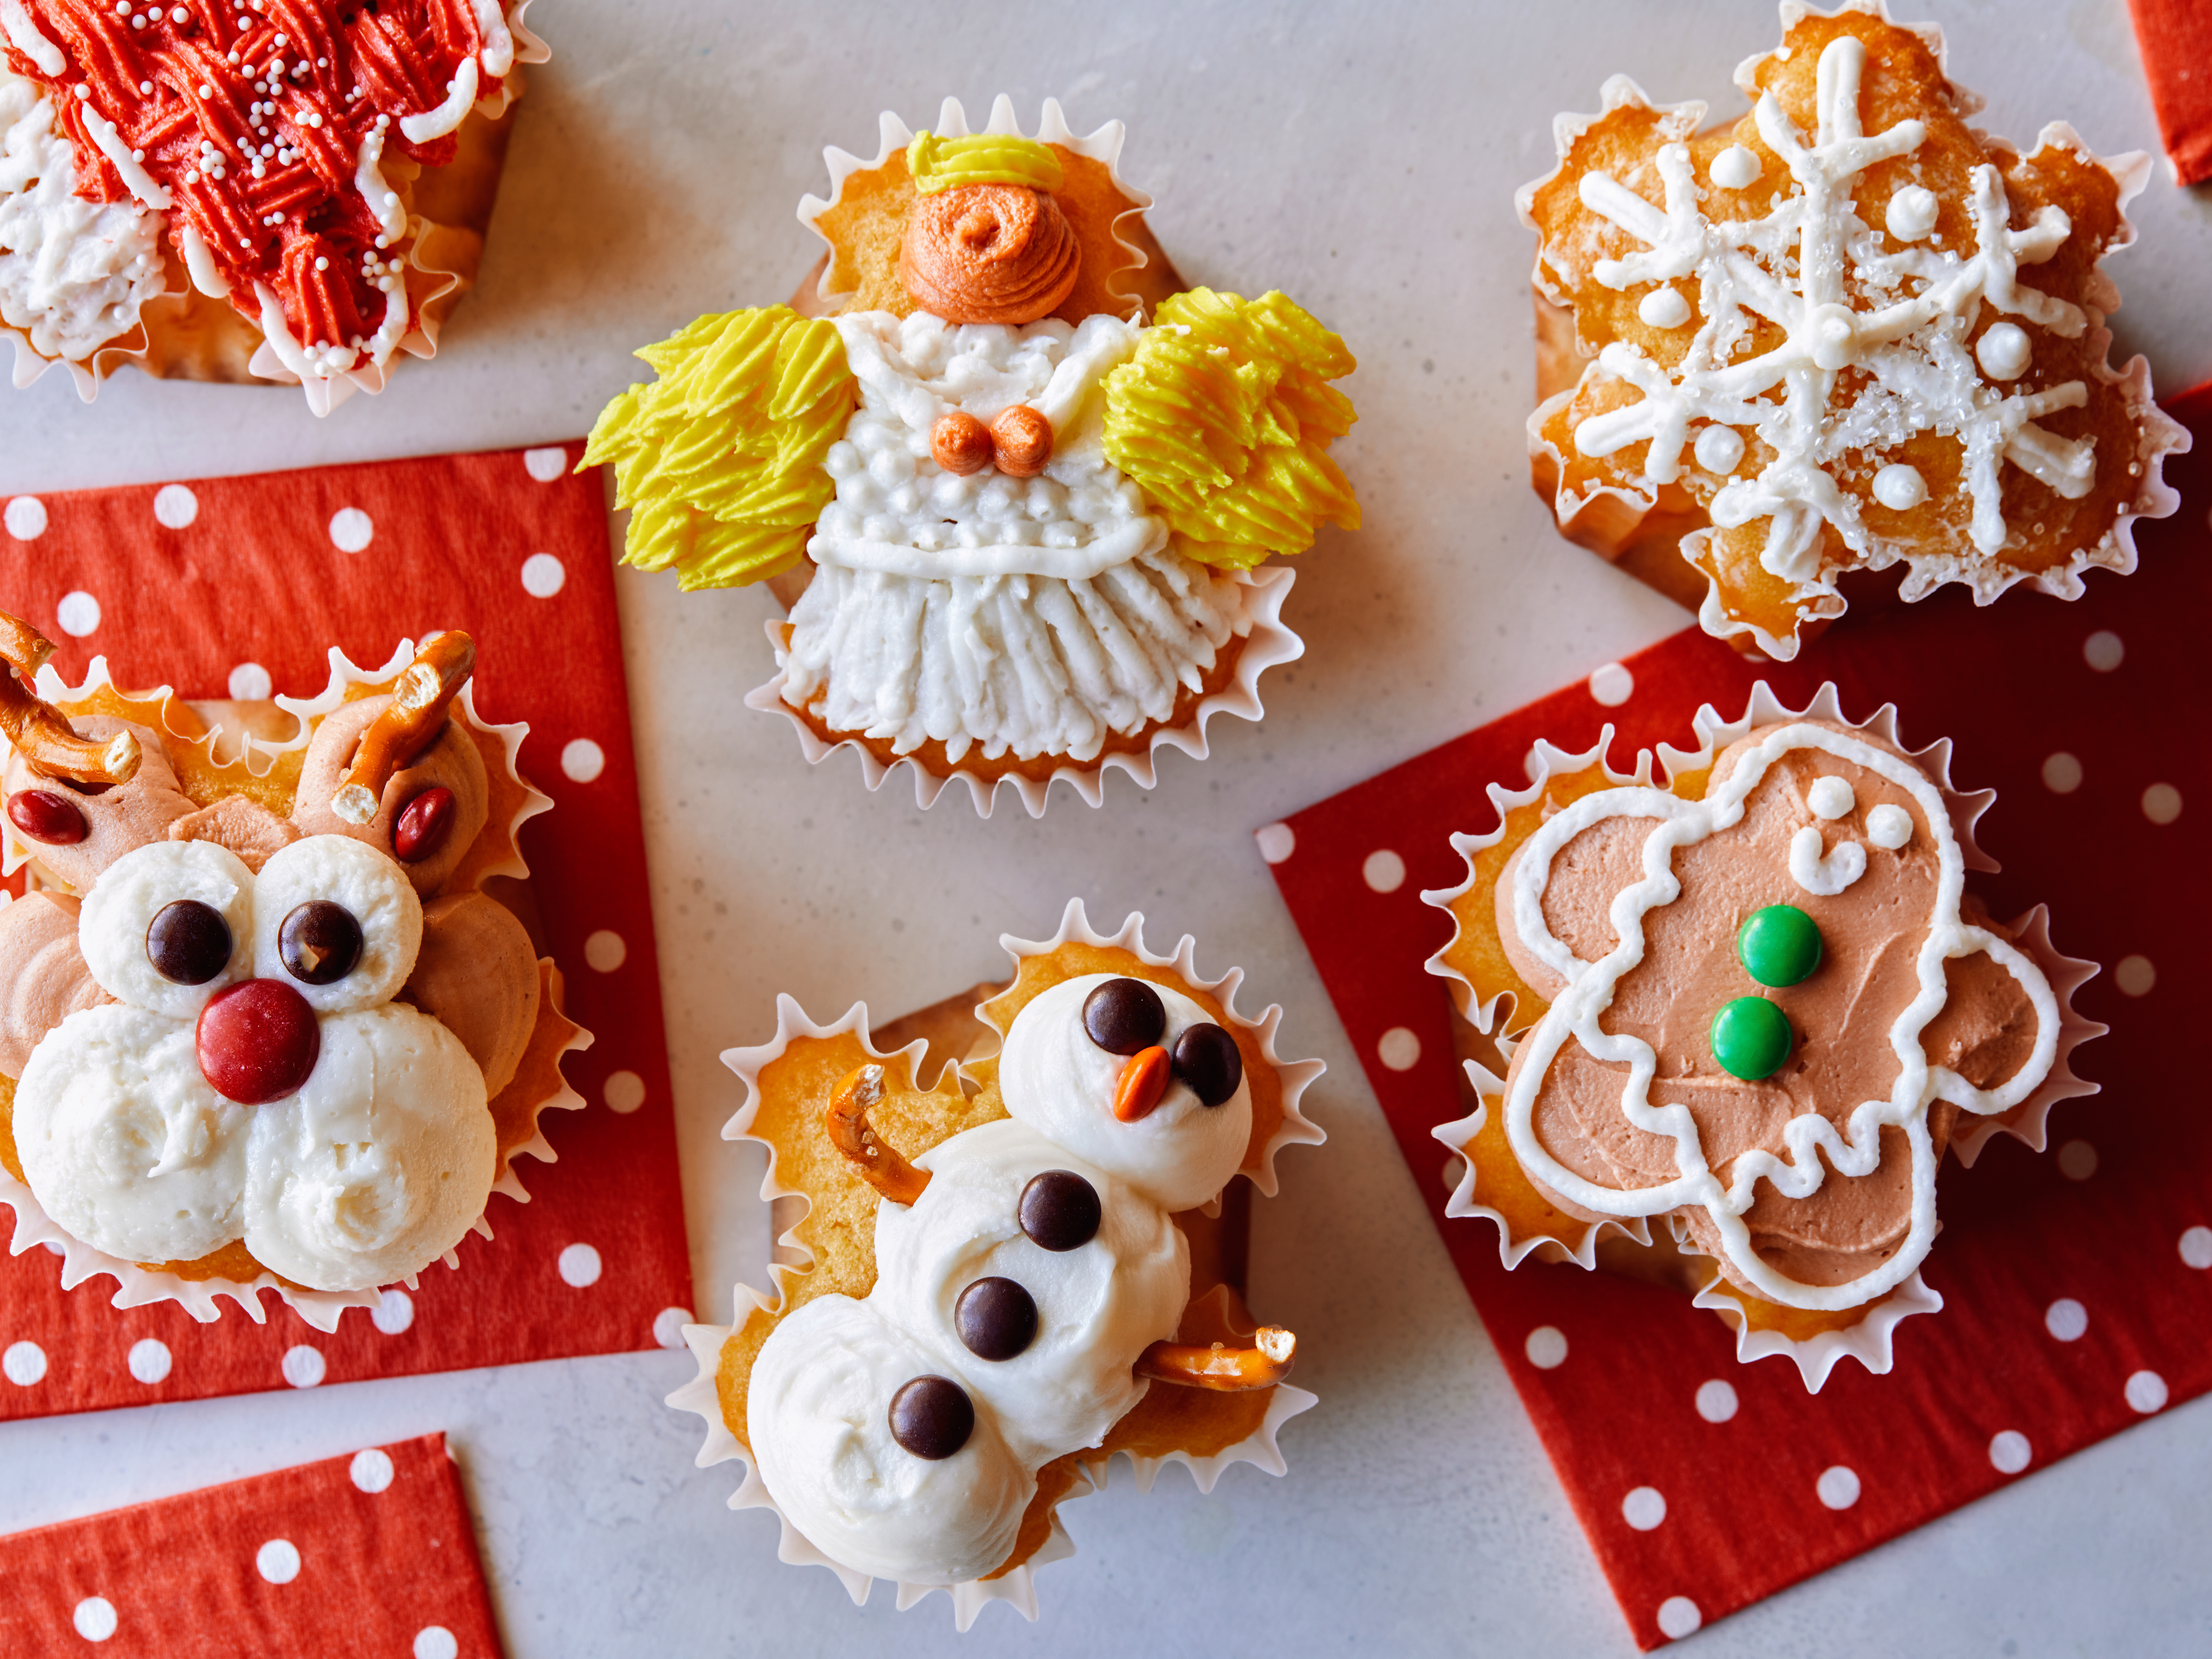 https://www.foodnetwork.com/content/dam/images/food/fullset/2022/09/27/0/FNK_Aluminum-Foil-Shaped-Holiday-Cupcakes_H2_s4x3.jpg